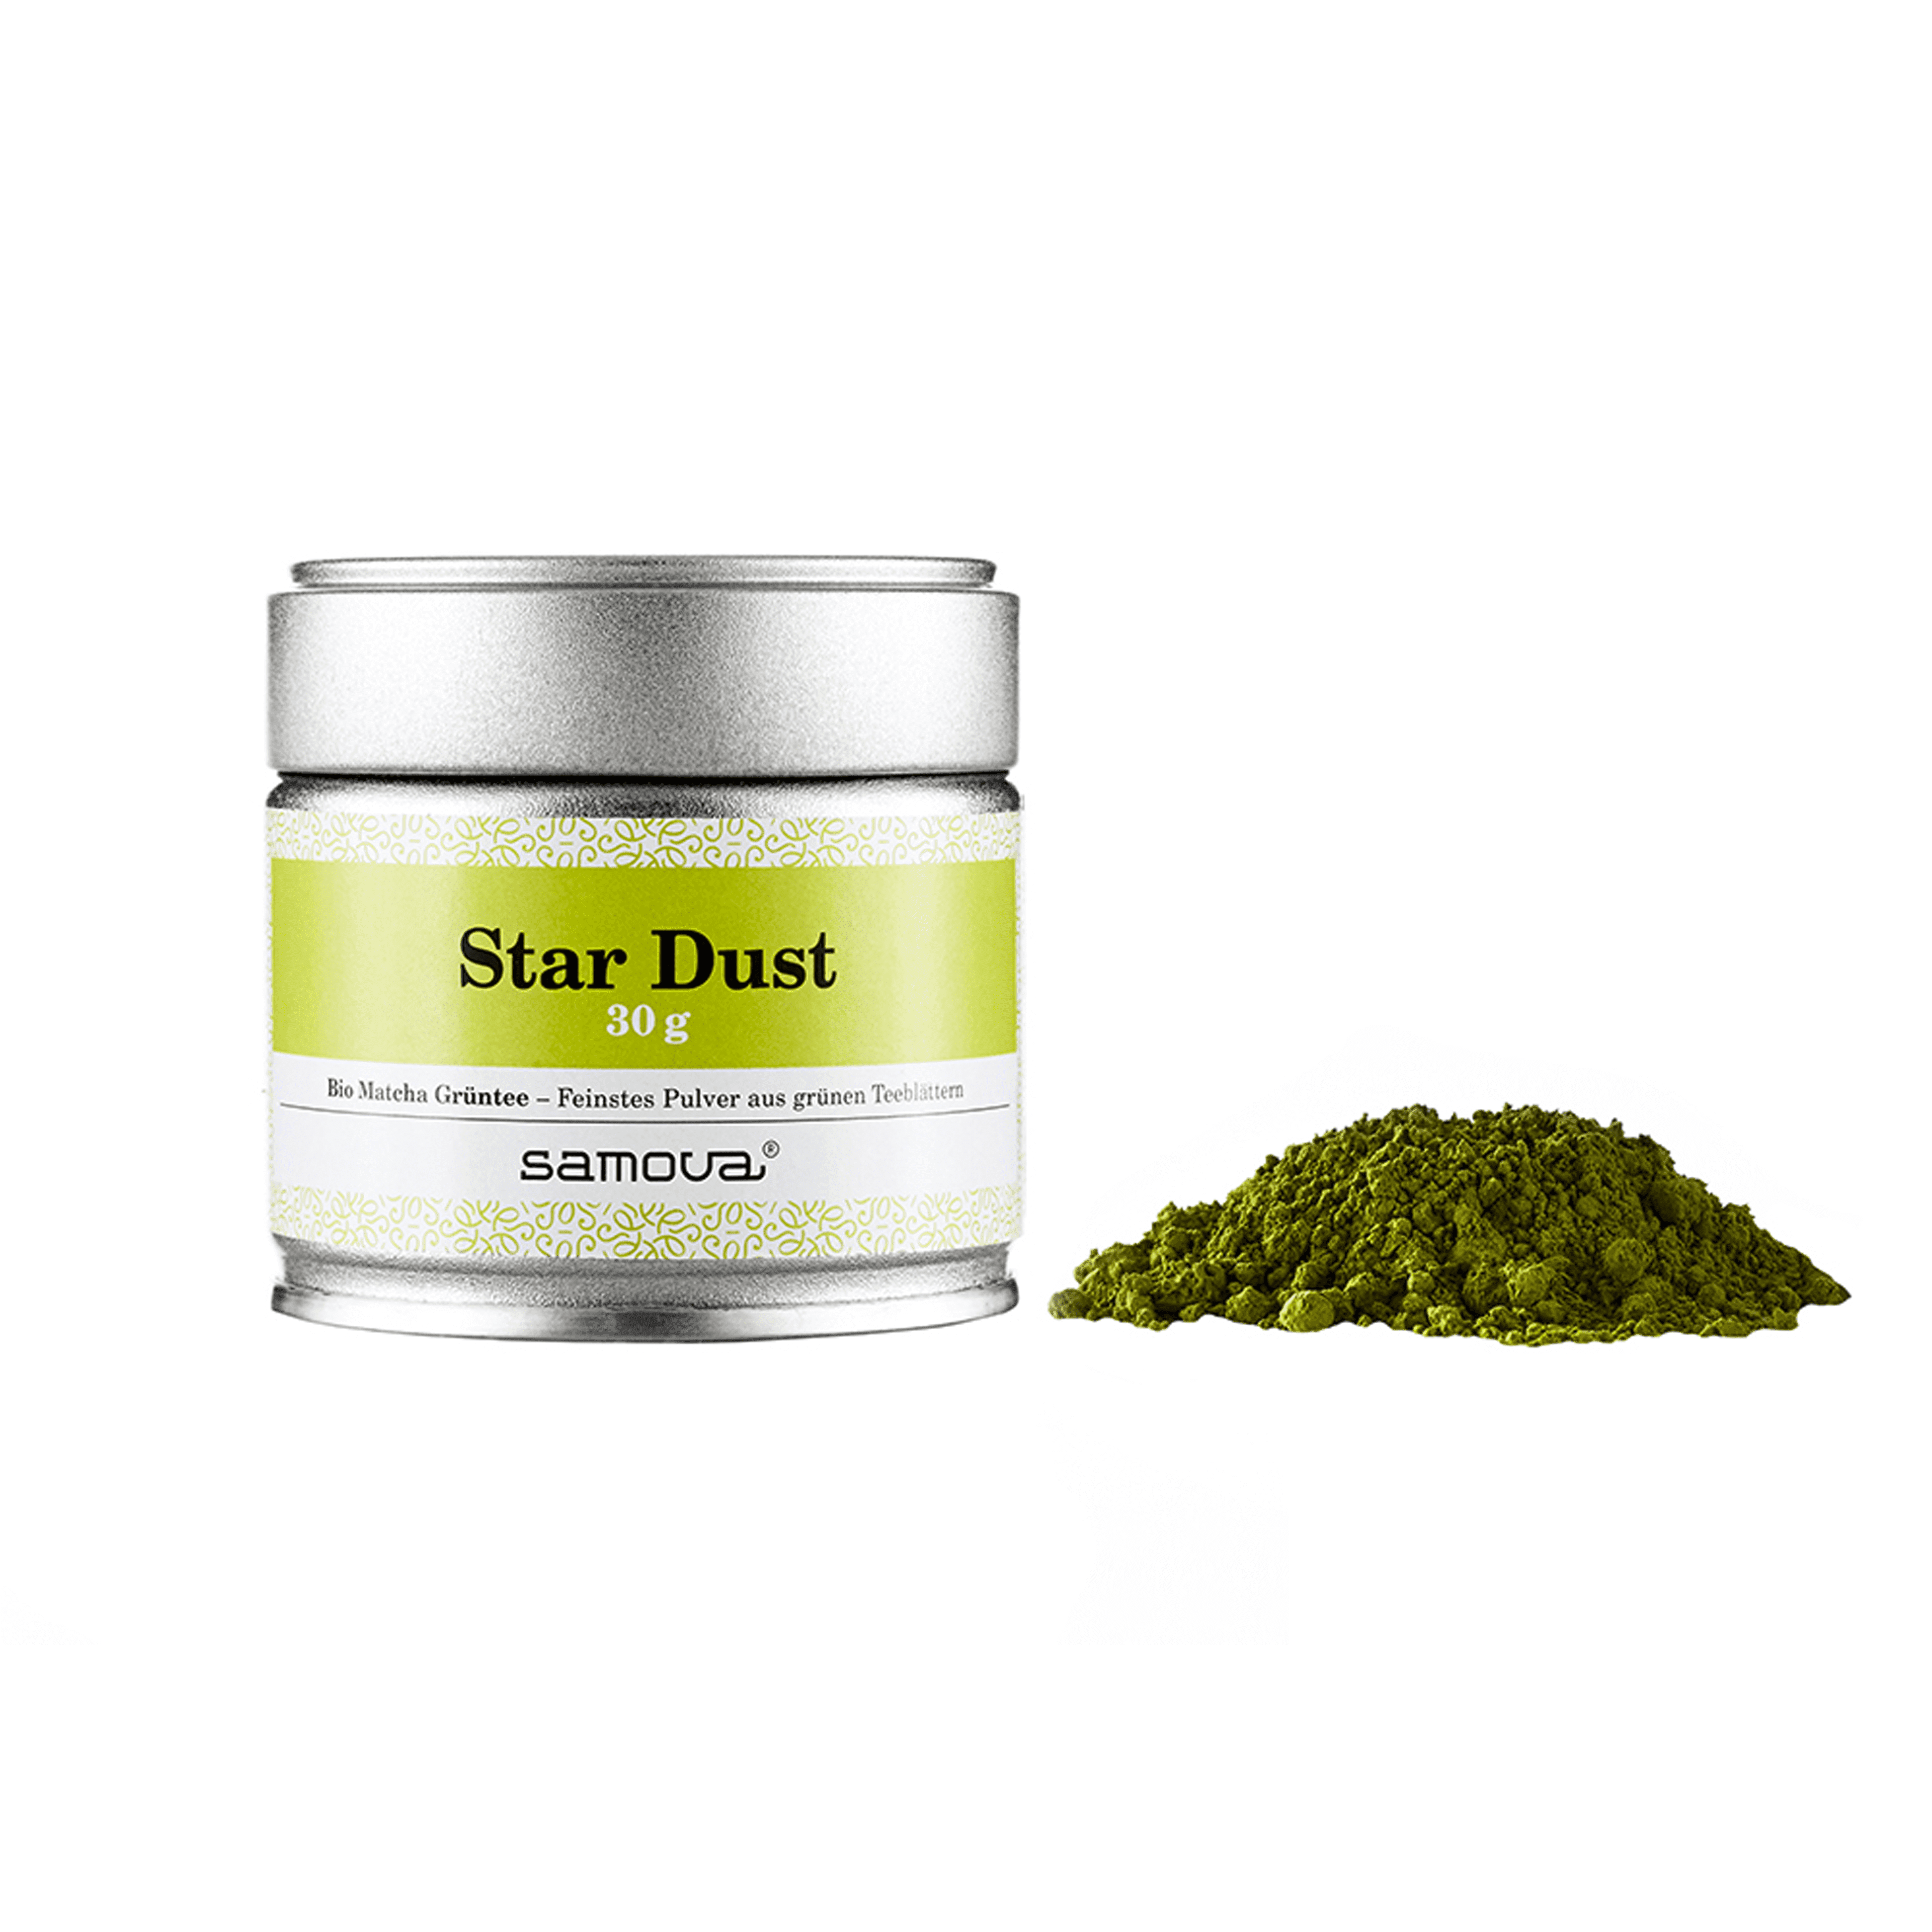 Can of Star Dust tea - organic matcha green tea